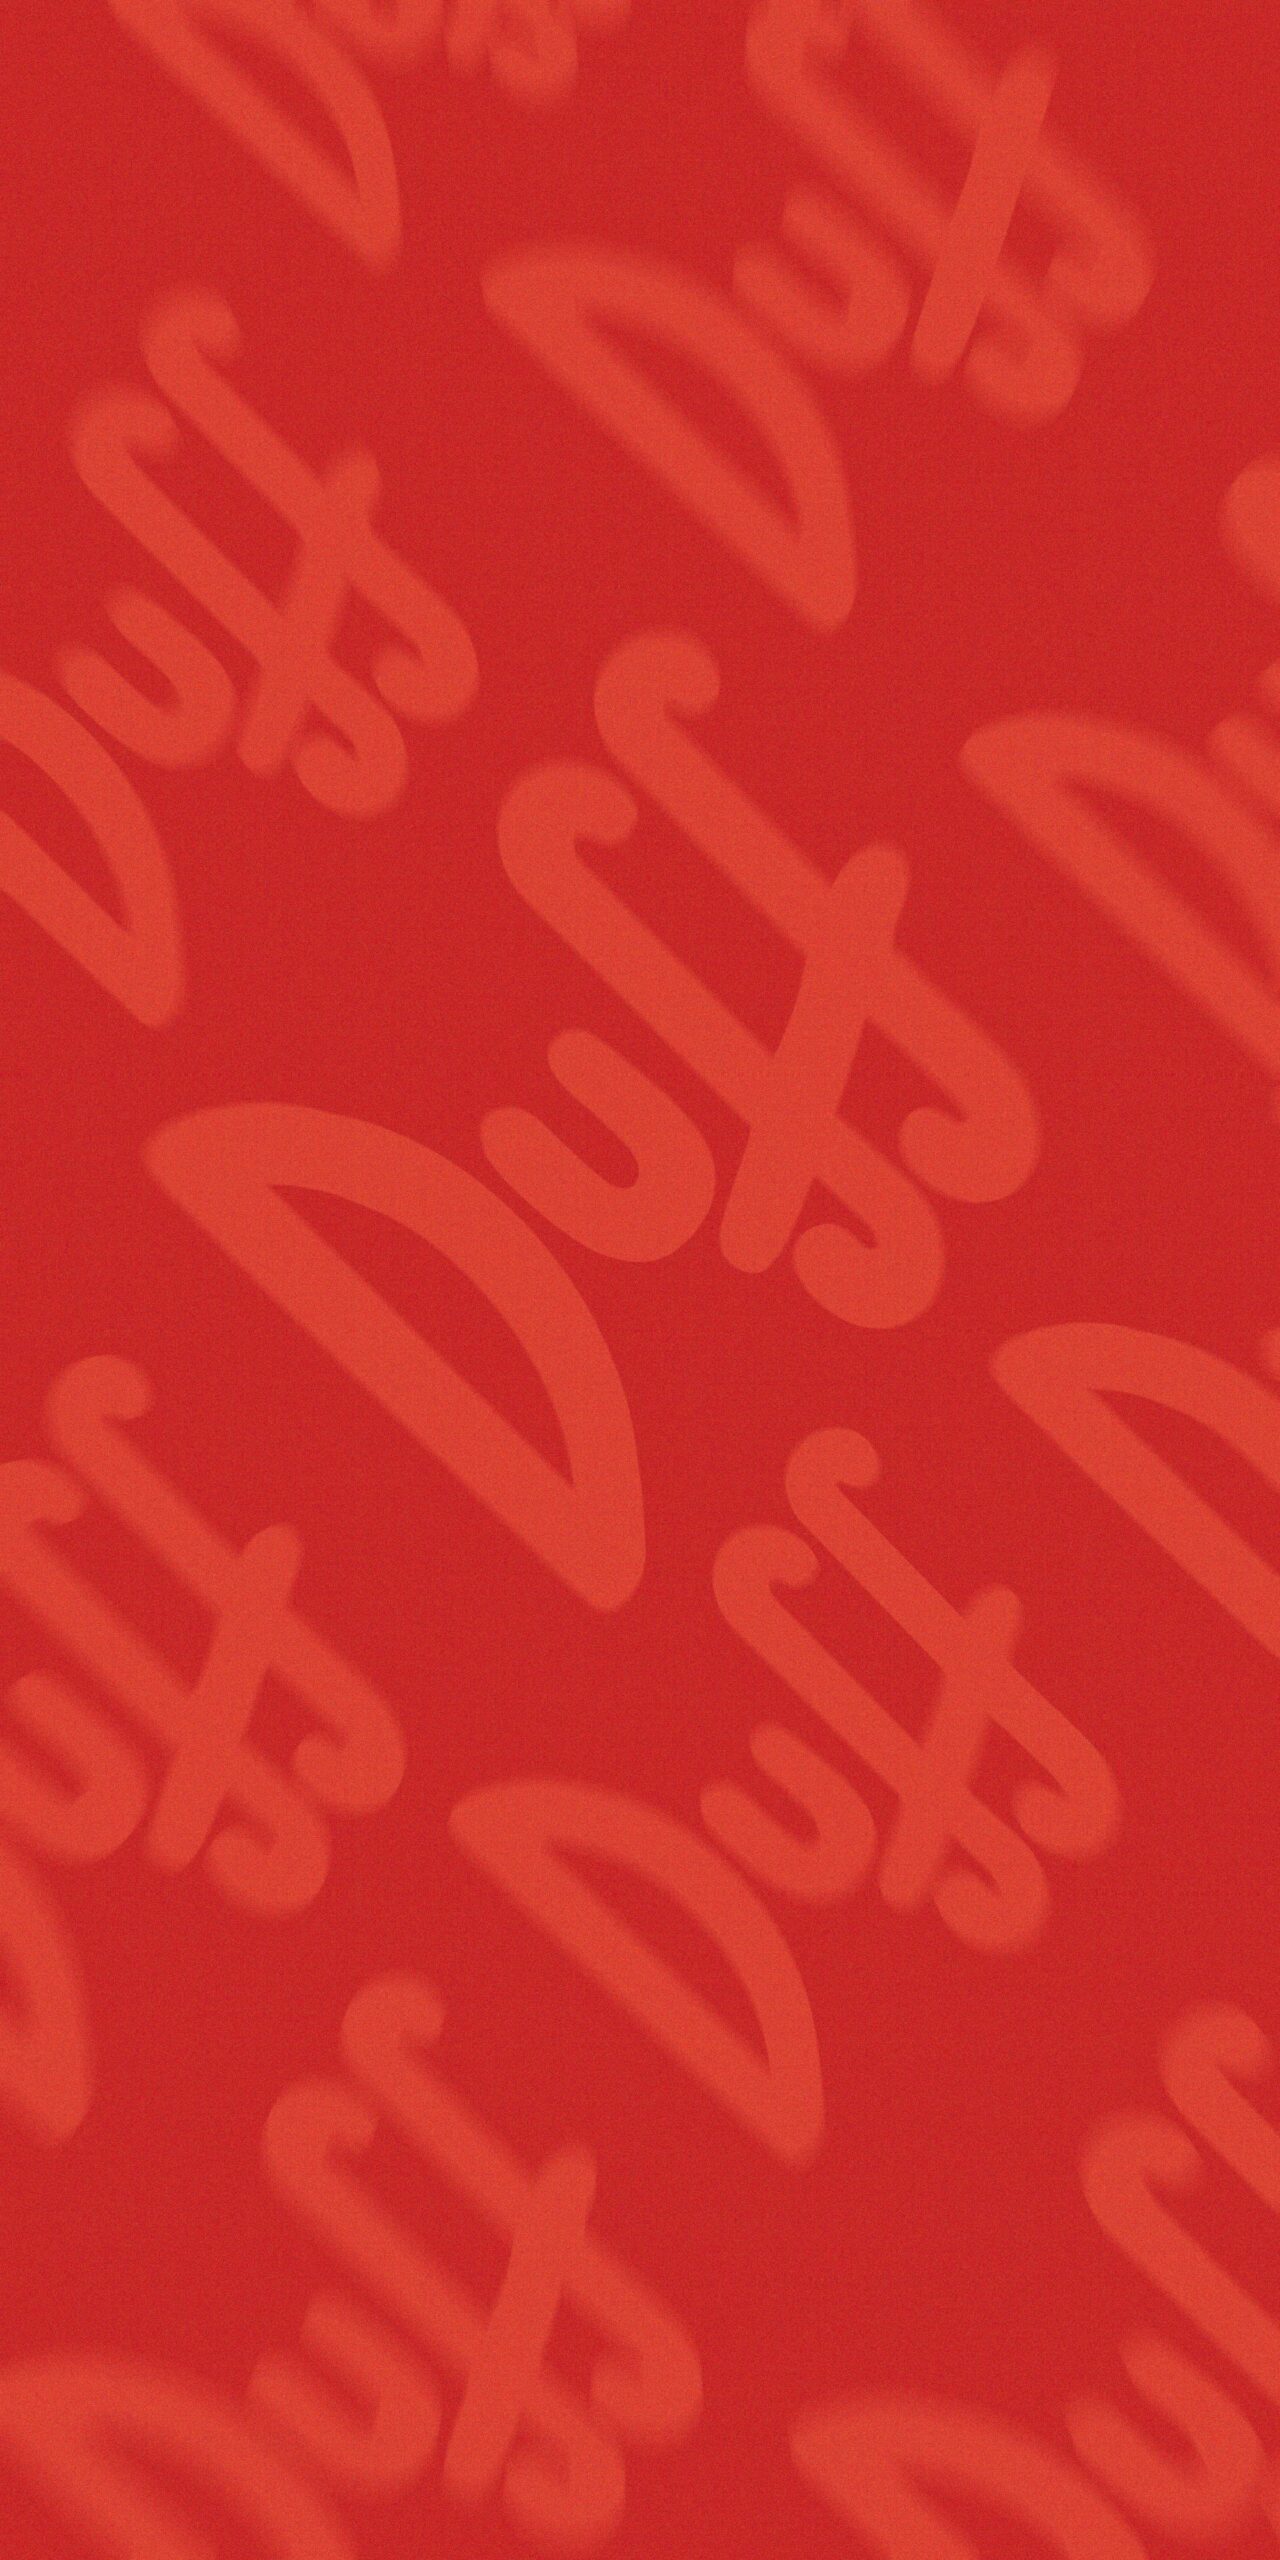 simpsons duff beer logo red background wallpaper